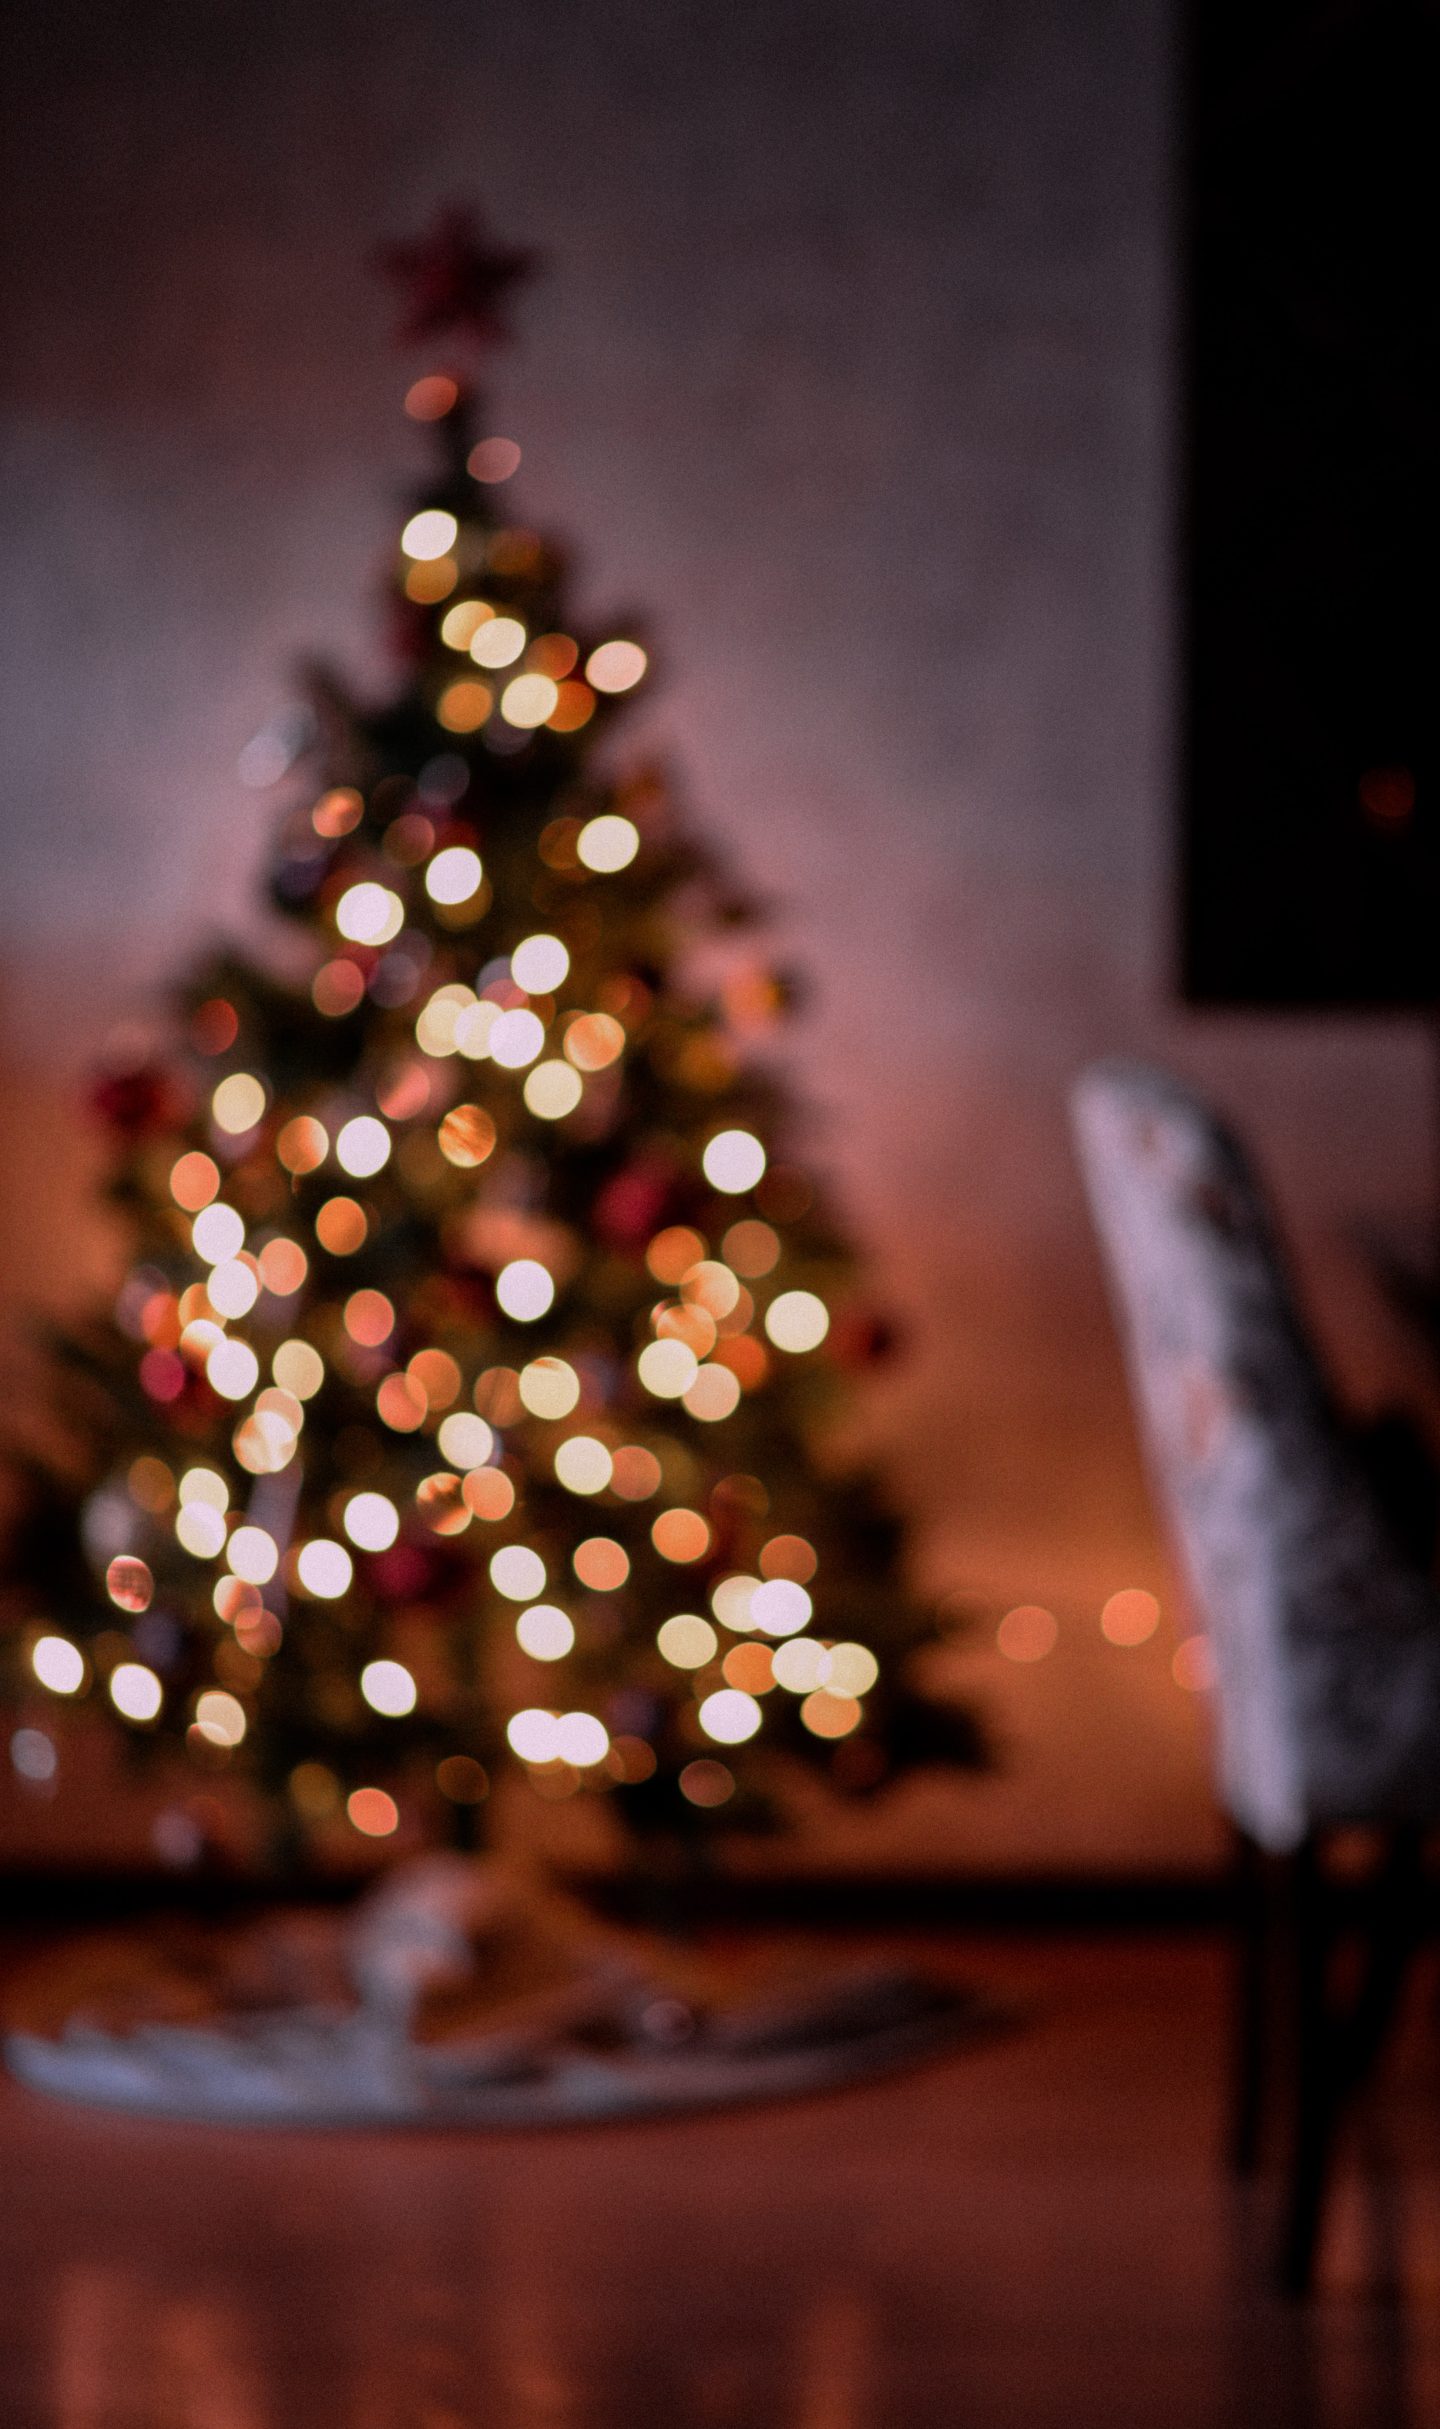 A blurry photo of a Christmas tree with lights on it. - Christmas, Christmas lights, cute Christmas, white Christmas